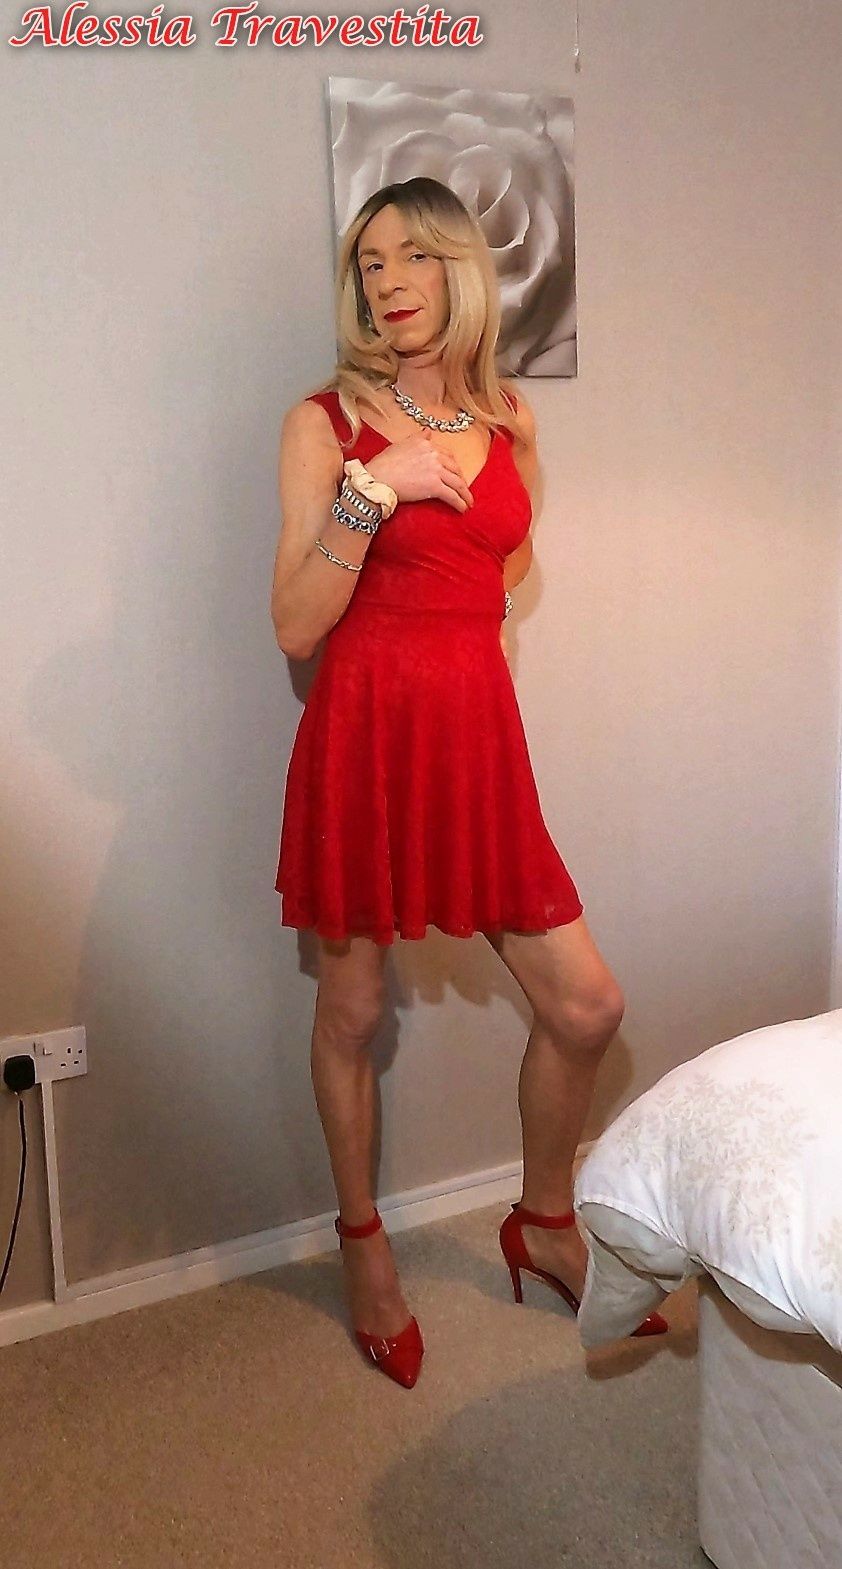 65 Alessia Travestita in Flirty Red Dress #44